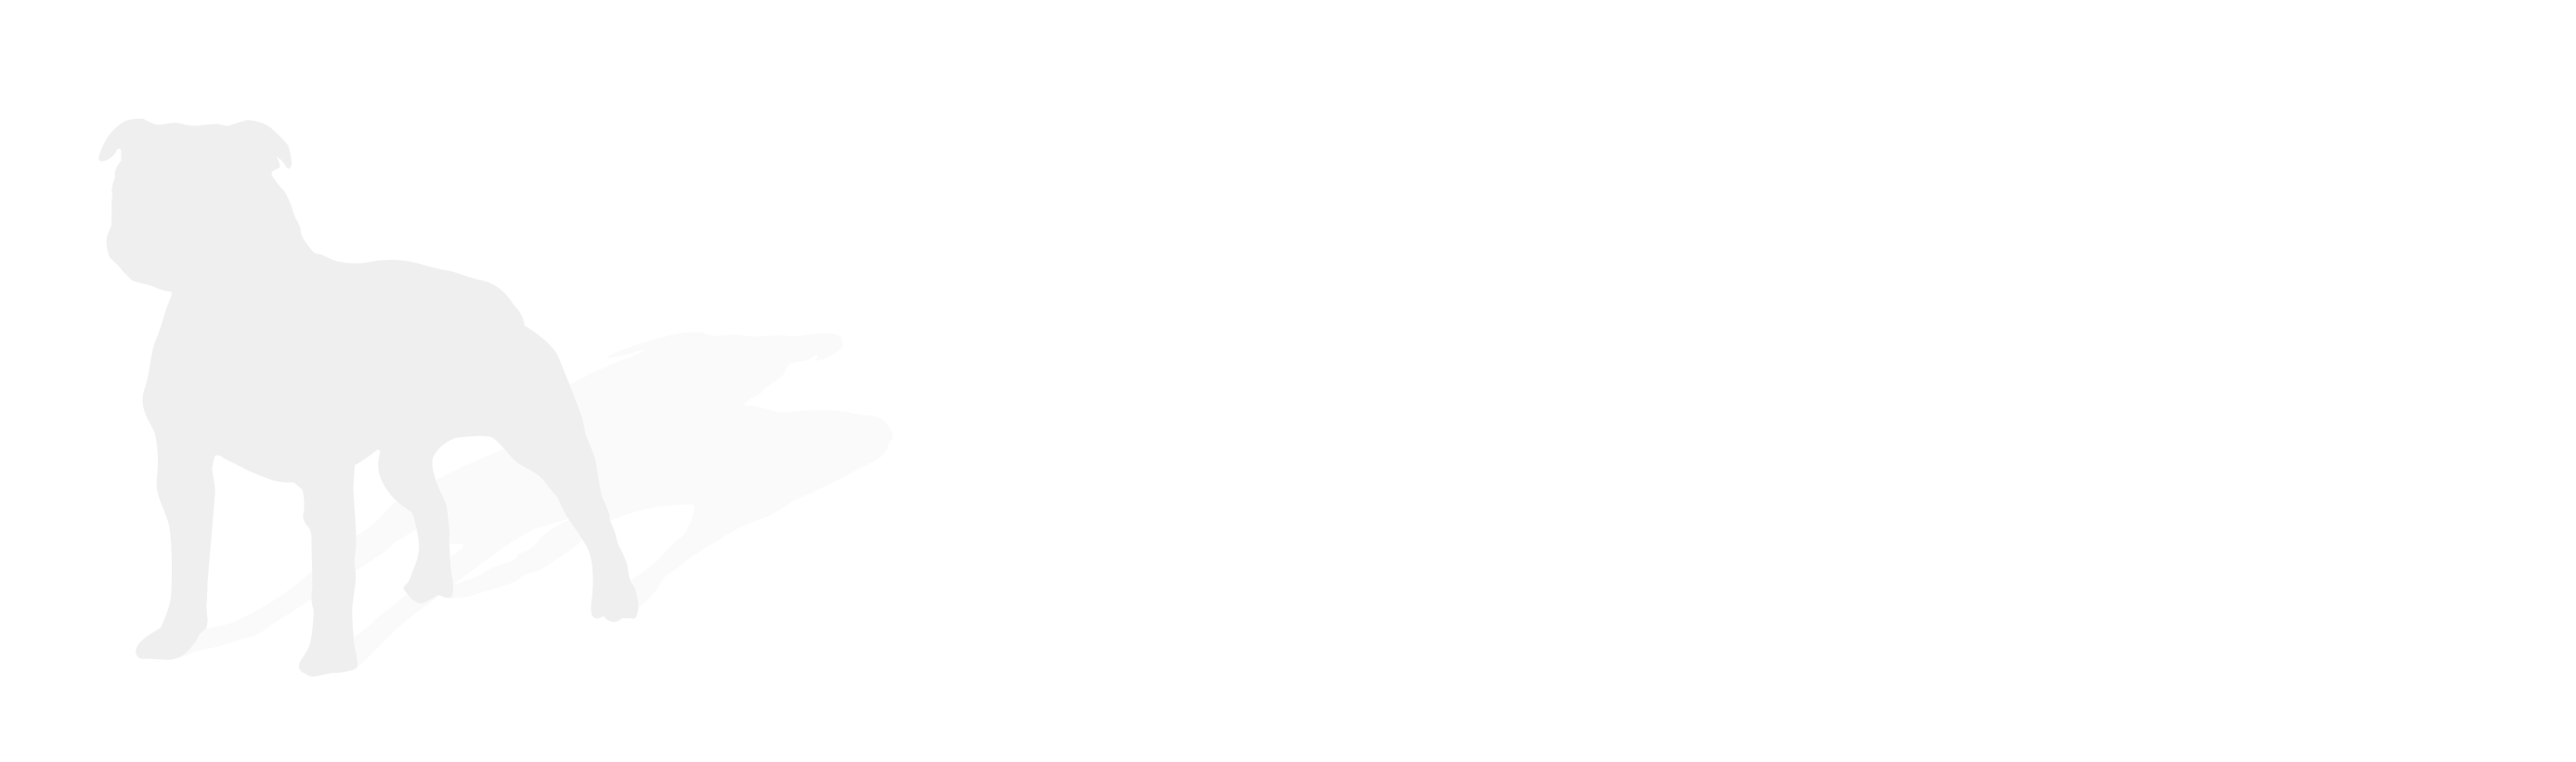 Double Dog Communications